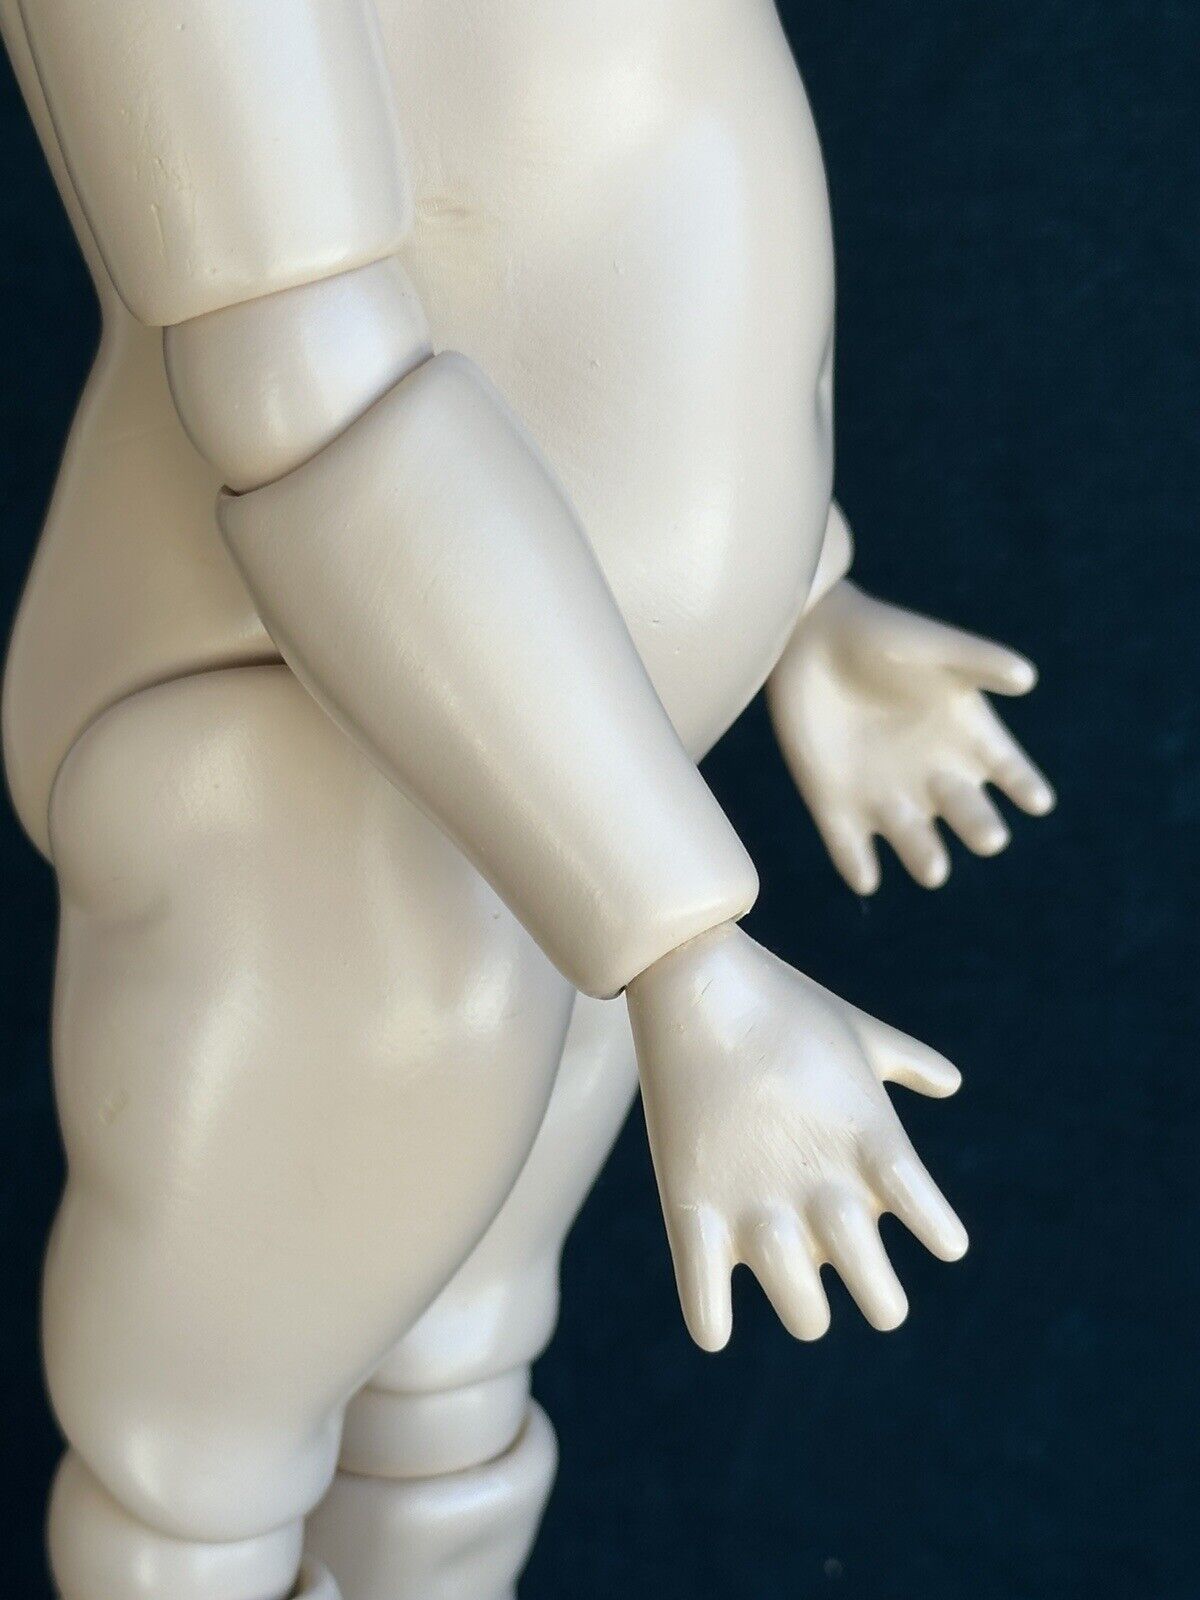 Porcelain/Composition 18” Reproduction of Antique German Gebruder Heubach Doll